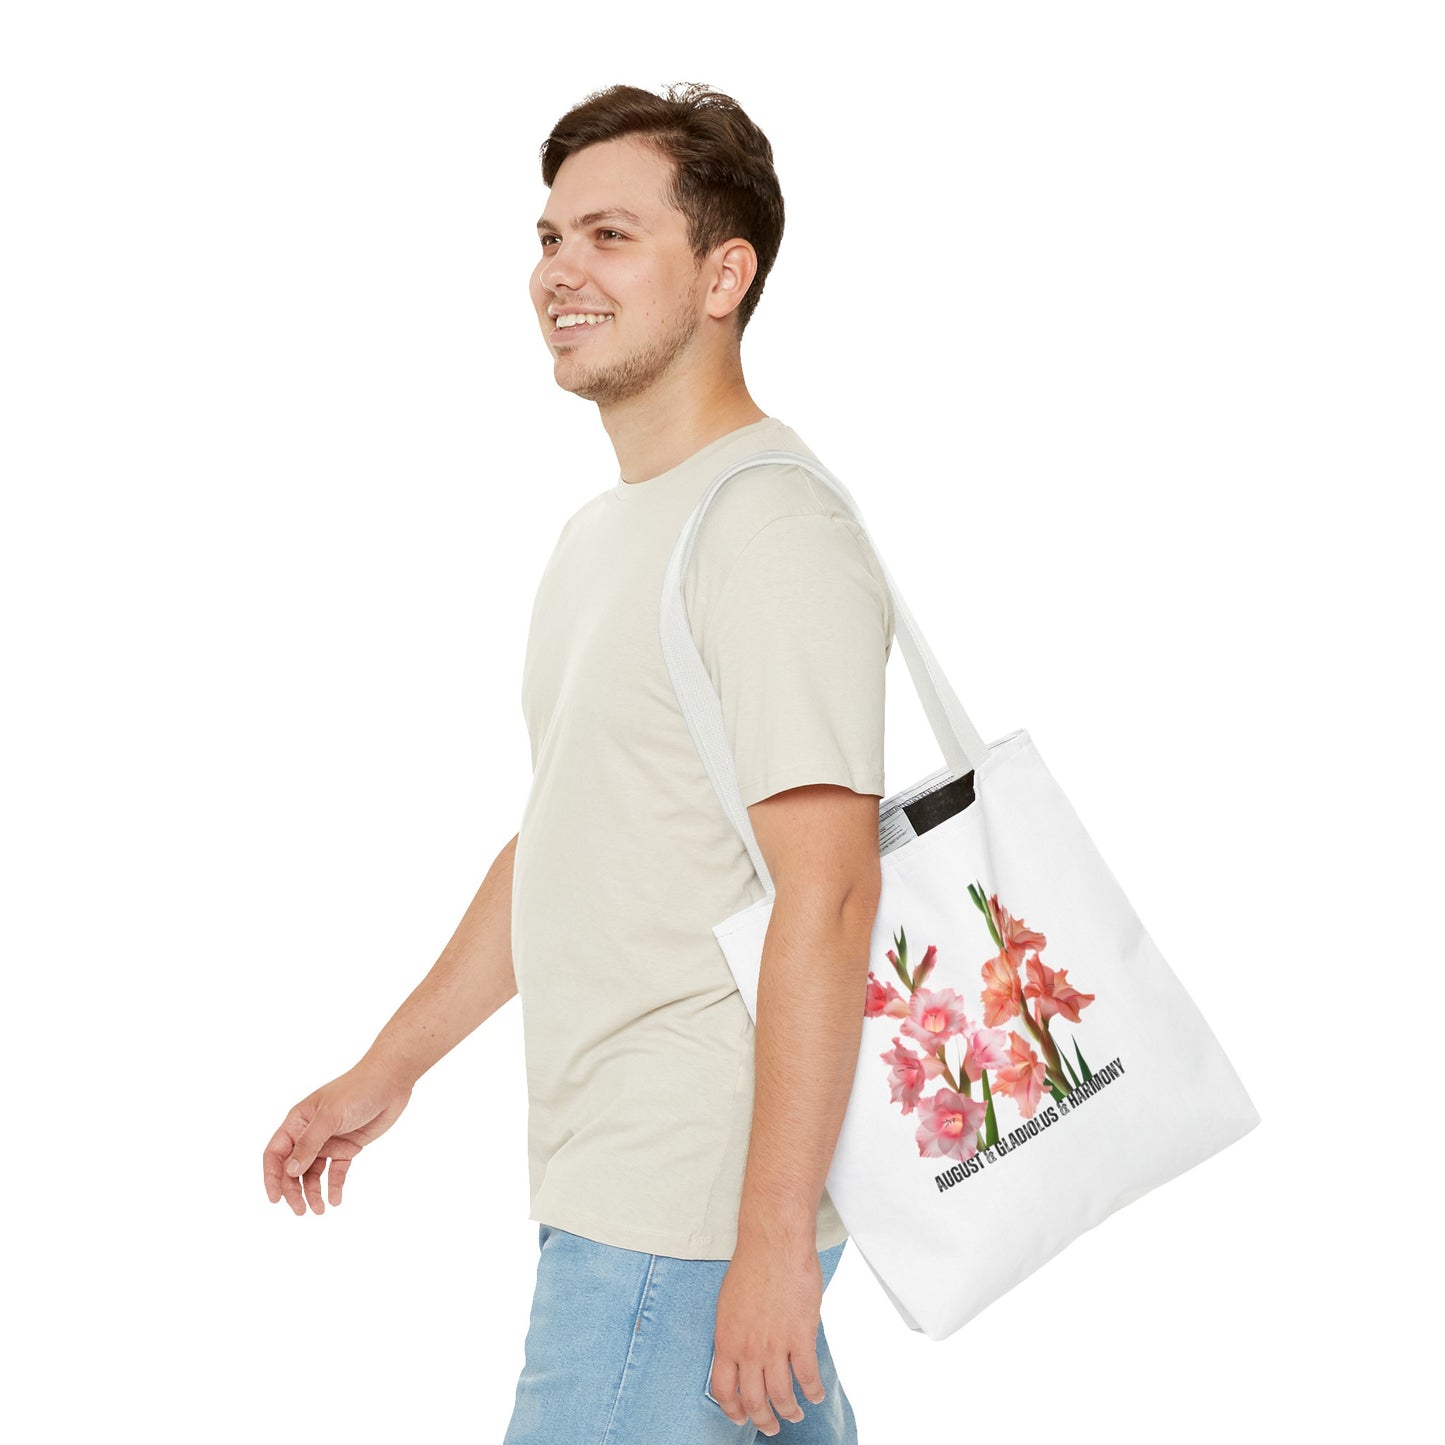 Happy birthday August, Gladiolus - Tote Bag